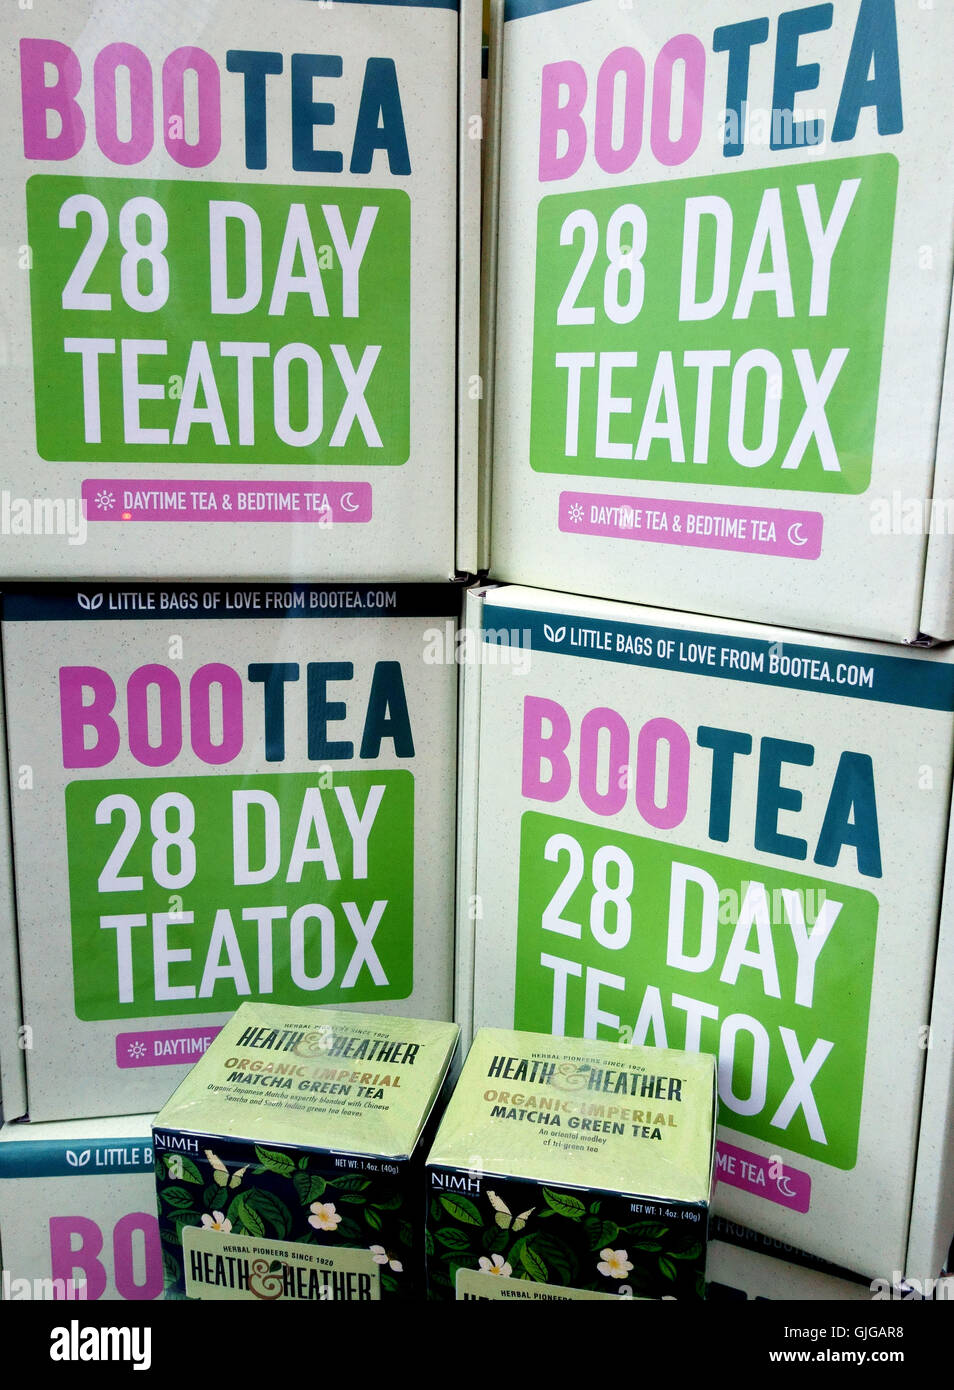 Bootea 28 day detox tea in health food shop display, London Stock Photo -  Alamy